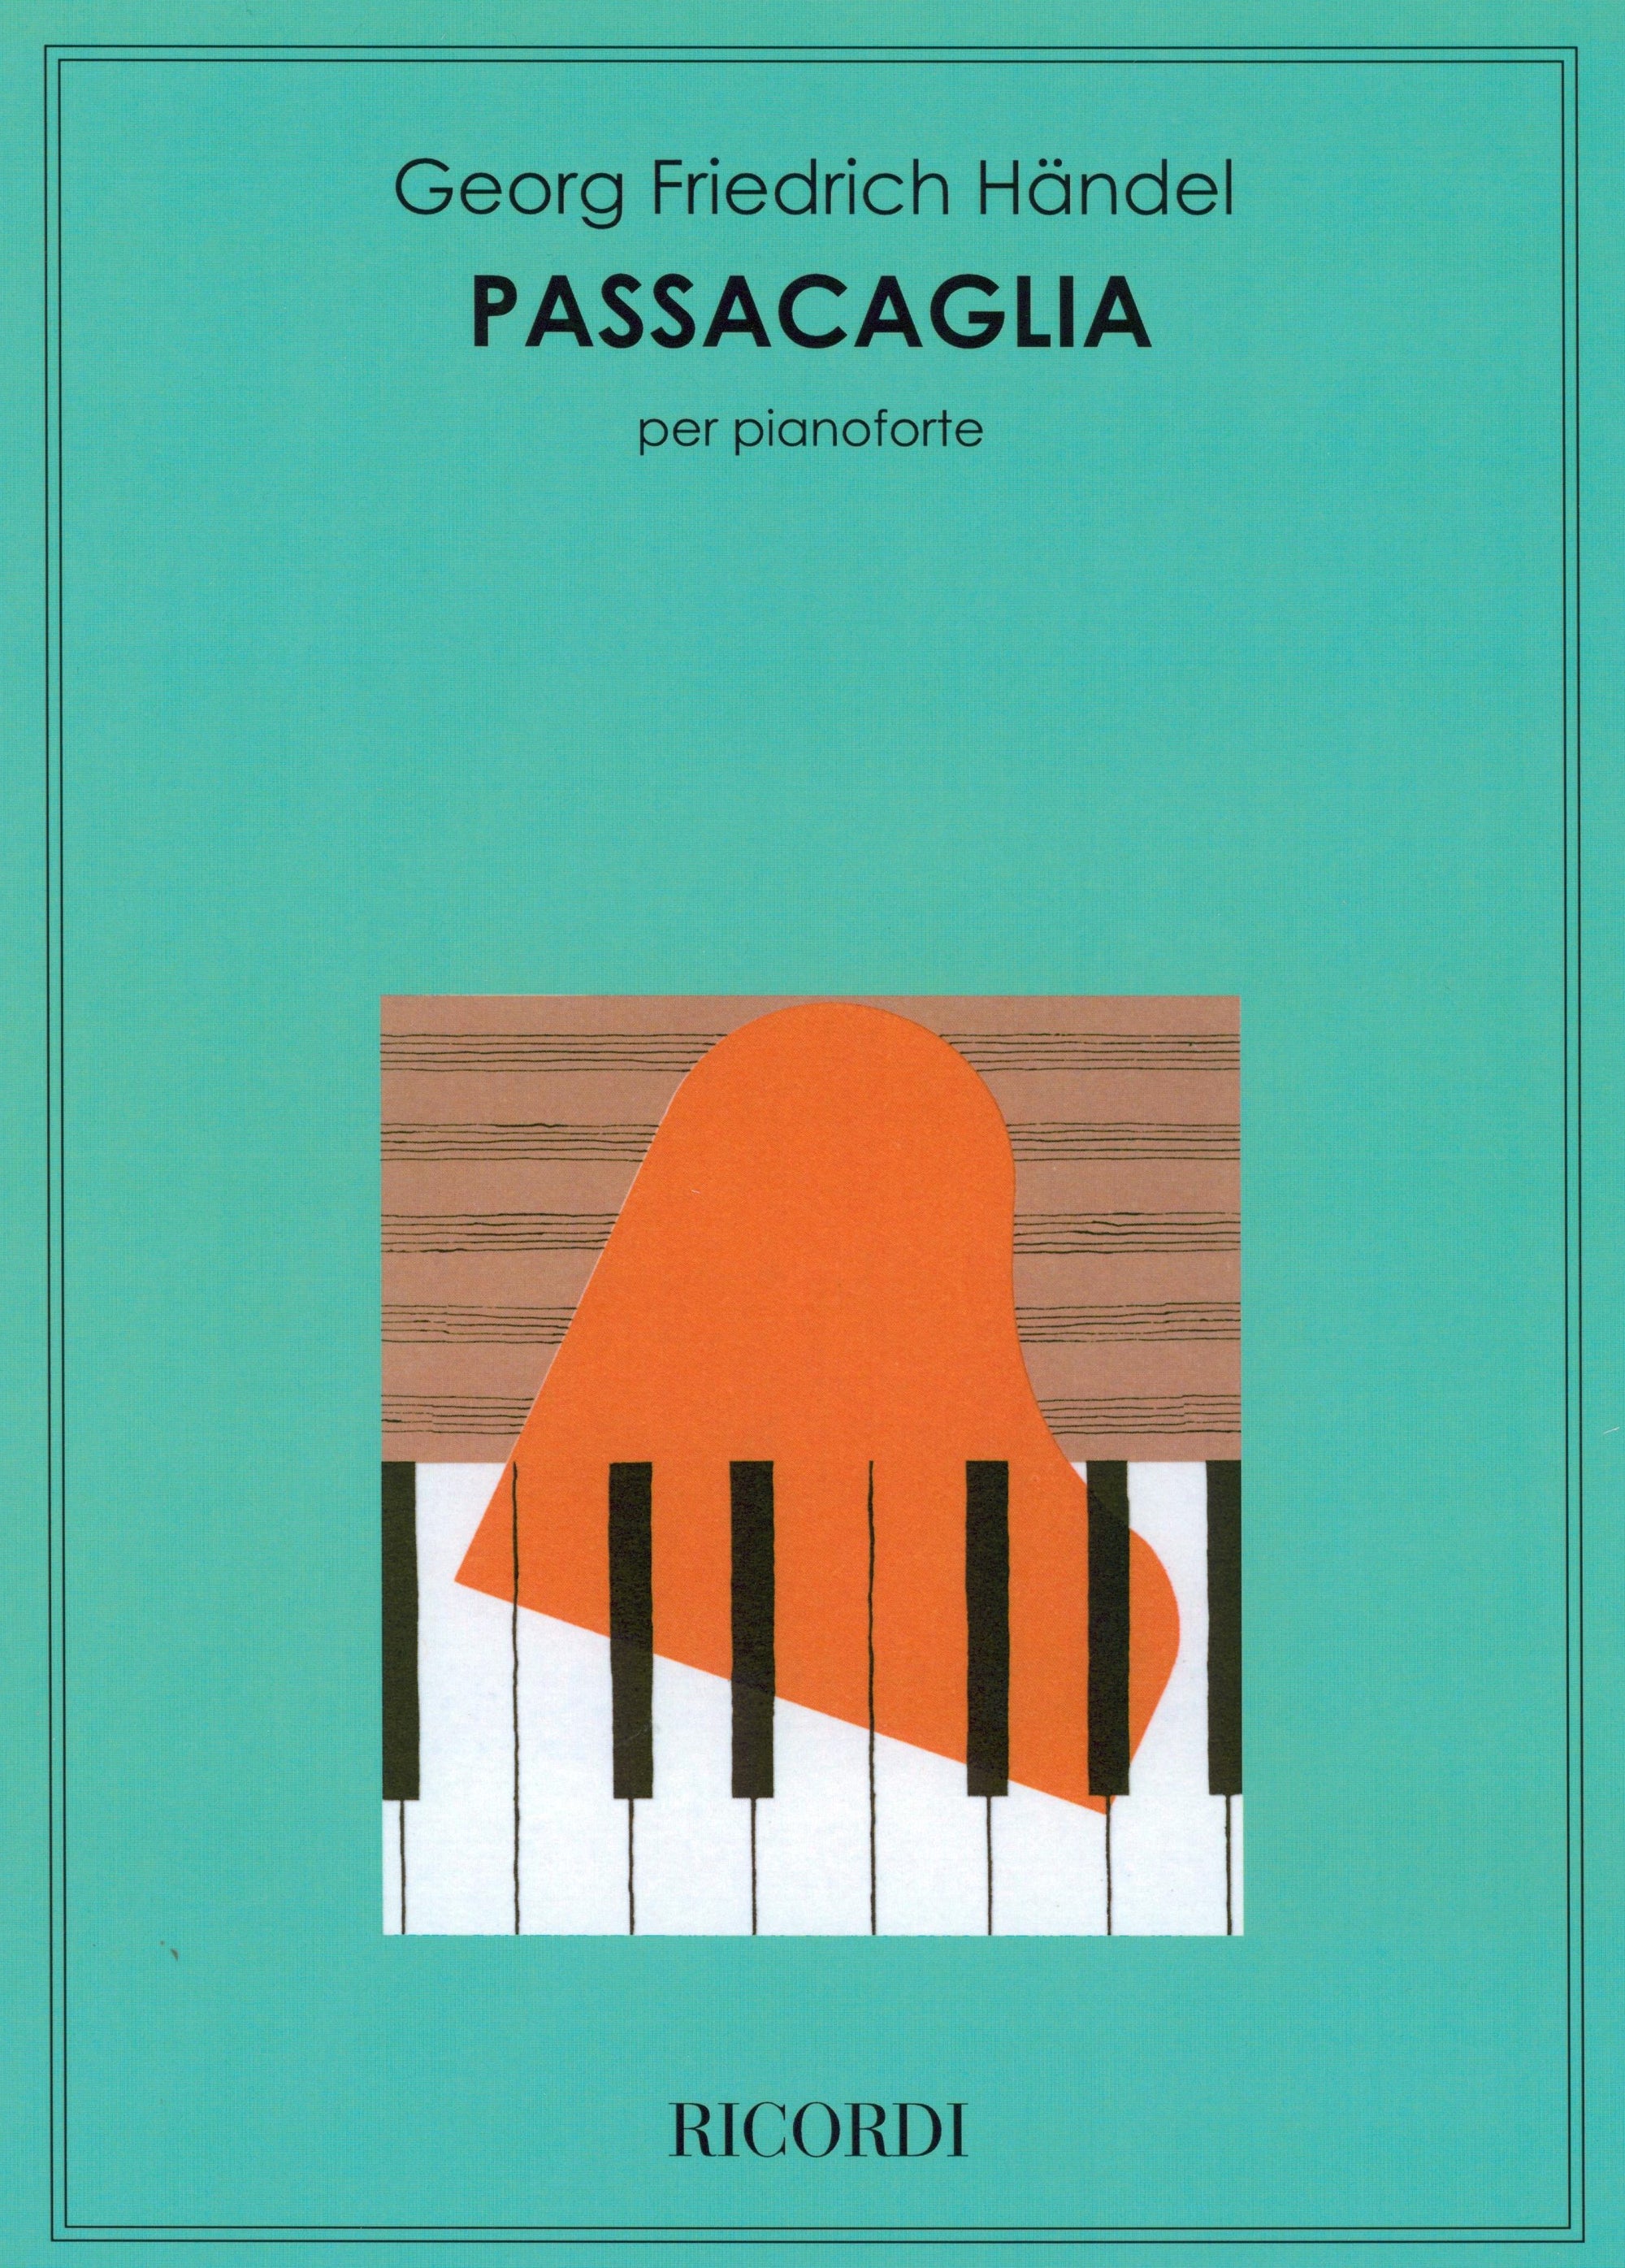 Handel: Passacaglia from Suite in G Minor, HWV 432